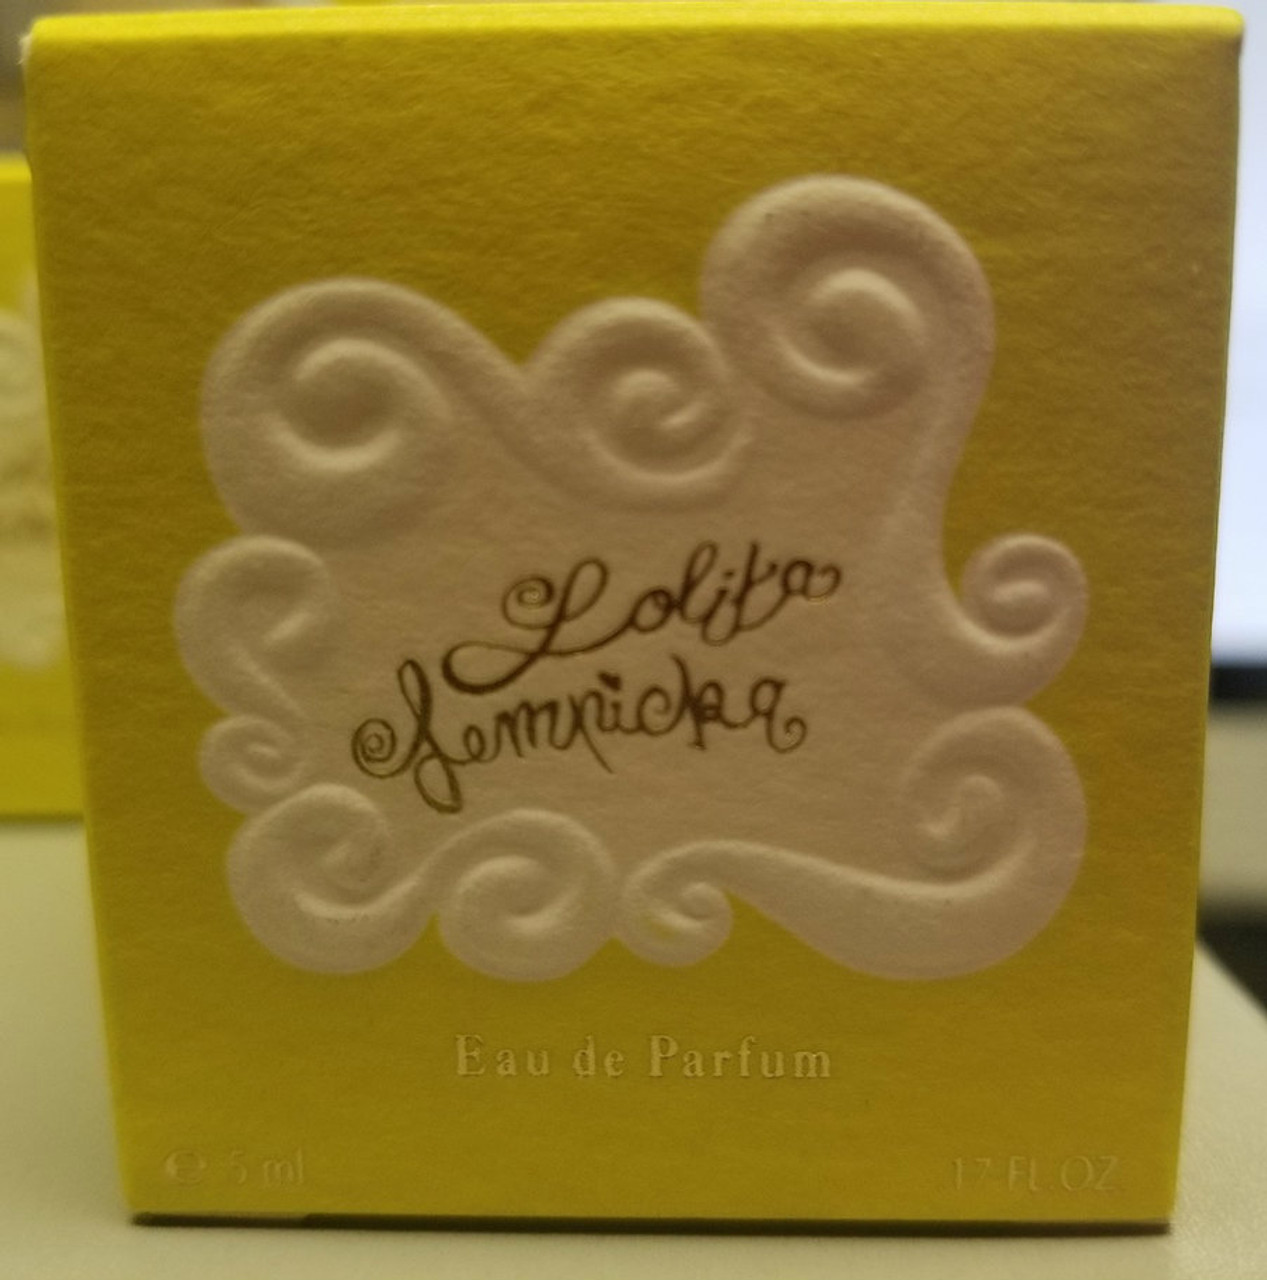 Miniature Perfume Lolita Lempicka Eau De Toilette -  Norway